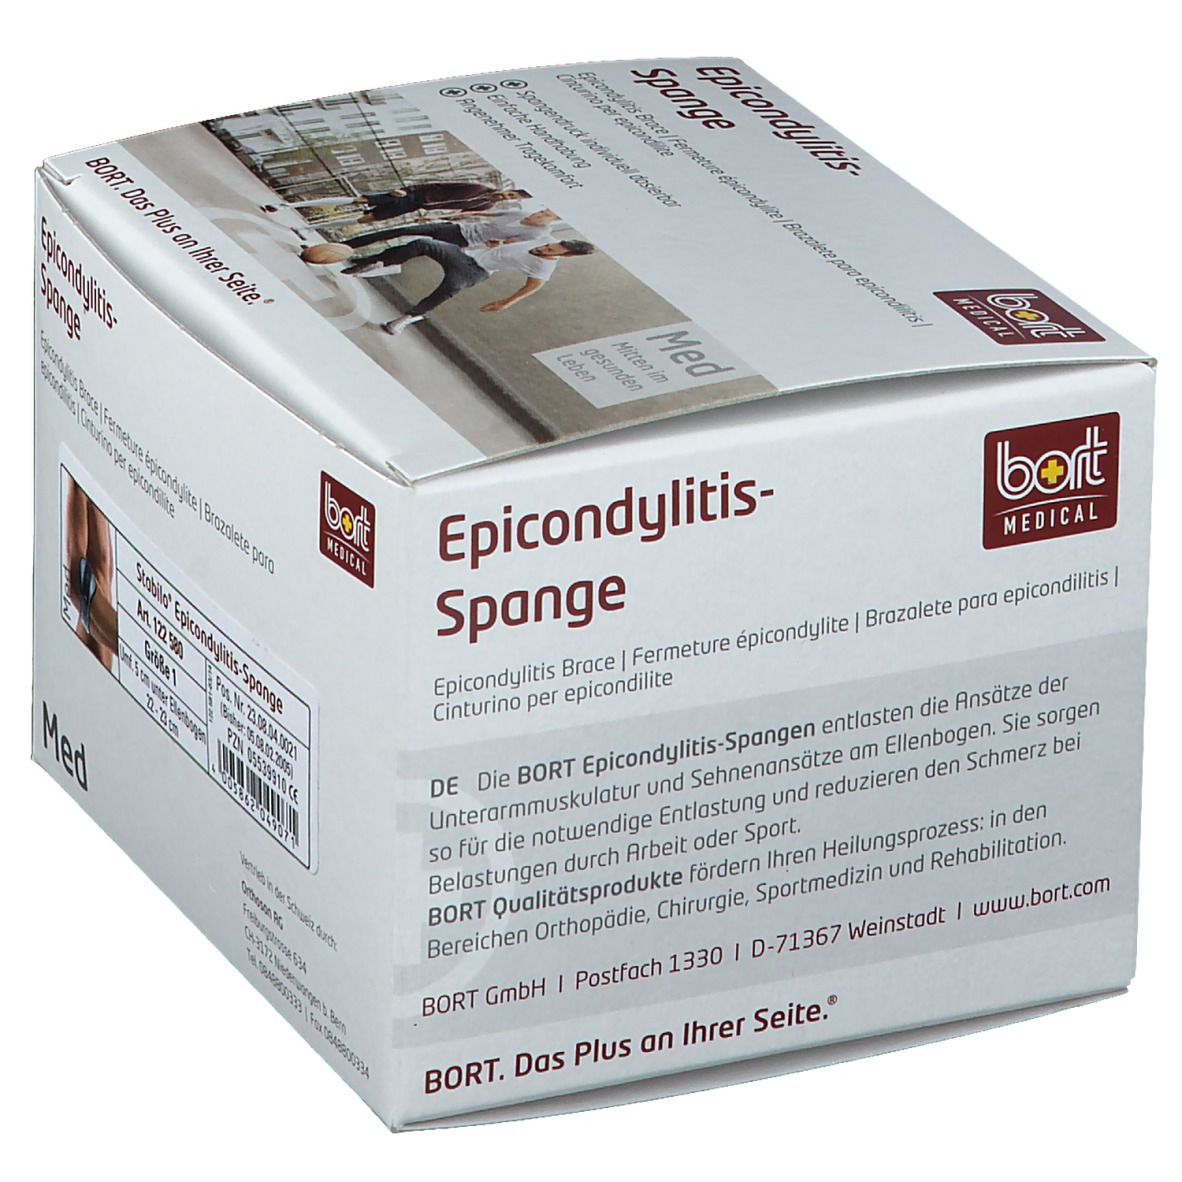 BORT Stabilo® Epicondylitis-Spange mit ulnarer Entlastung Gr. 1 grau